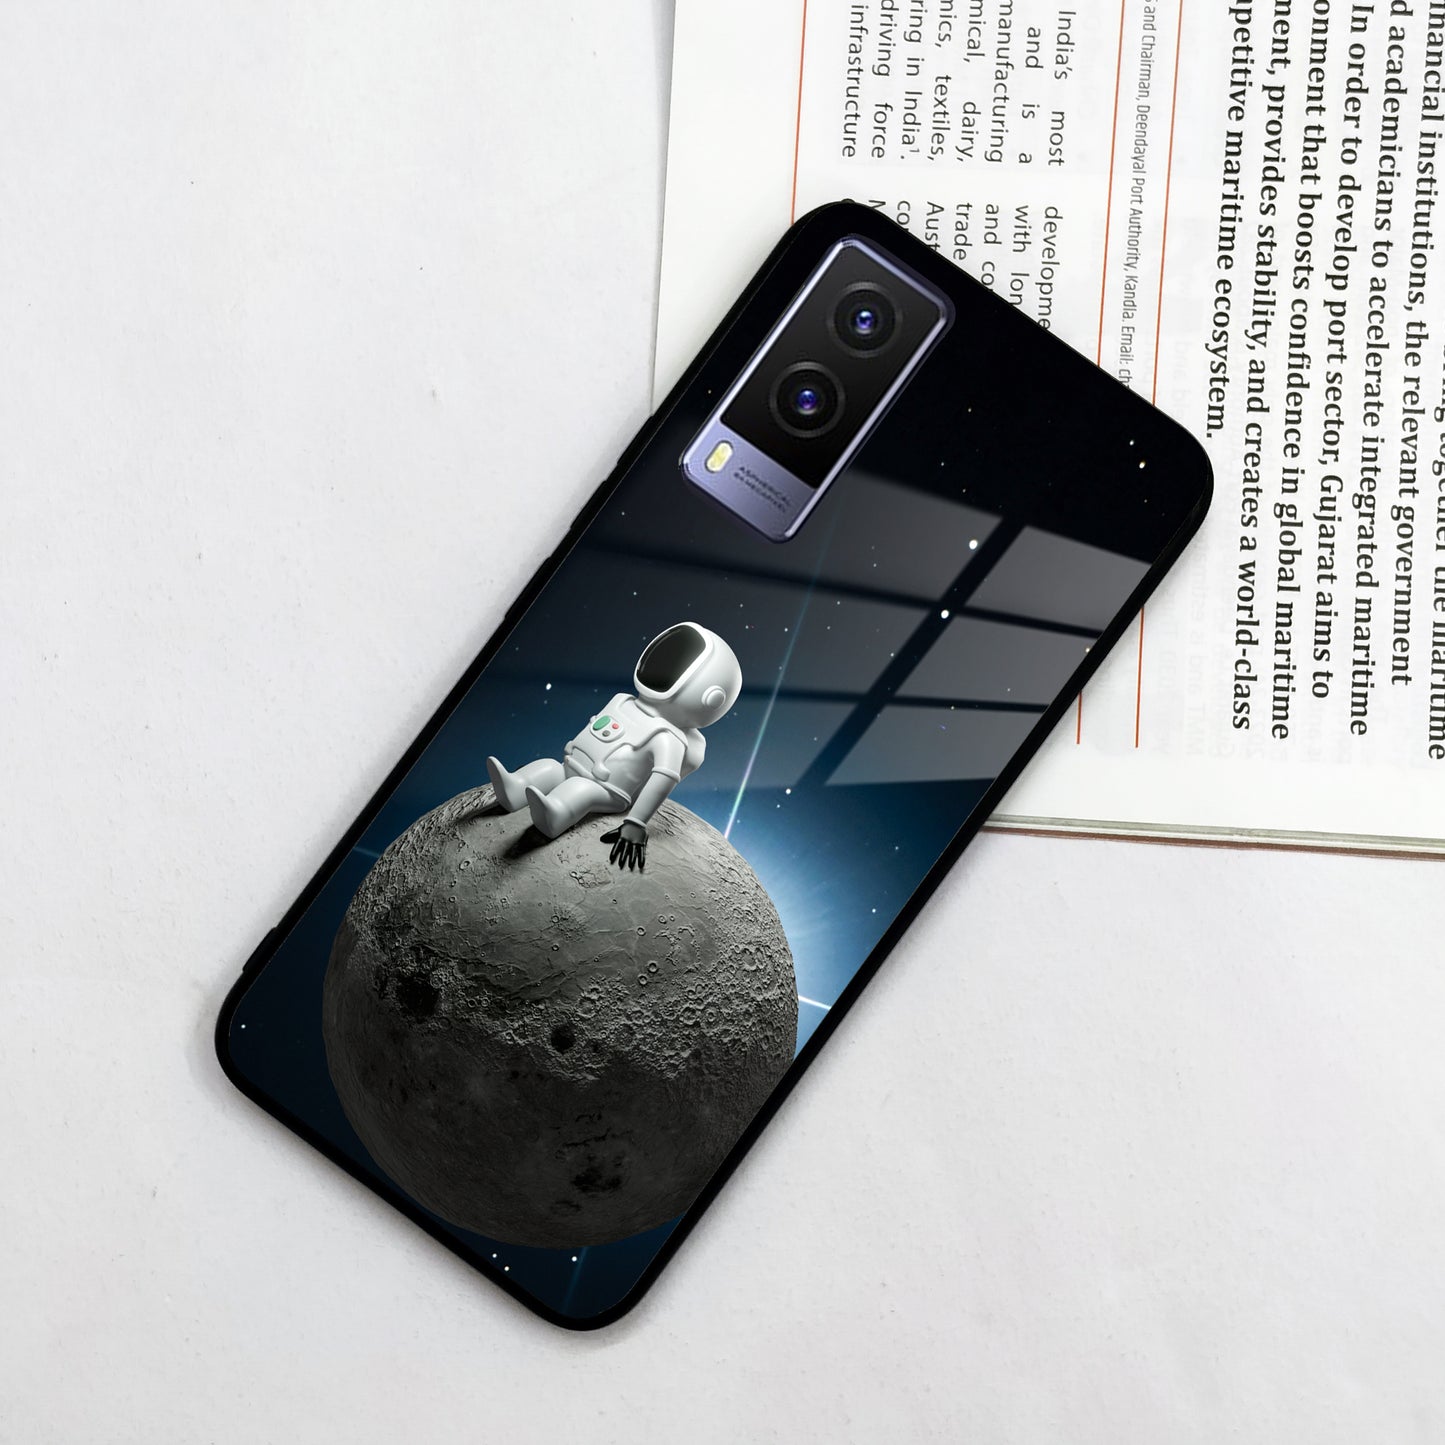 Astronod Moon Glass Case Cover For Vivo